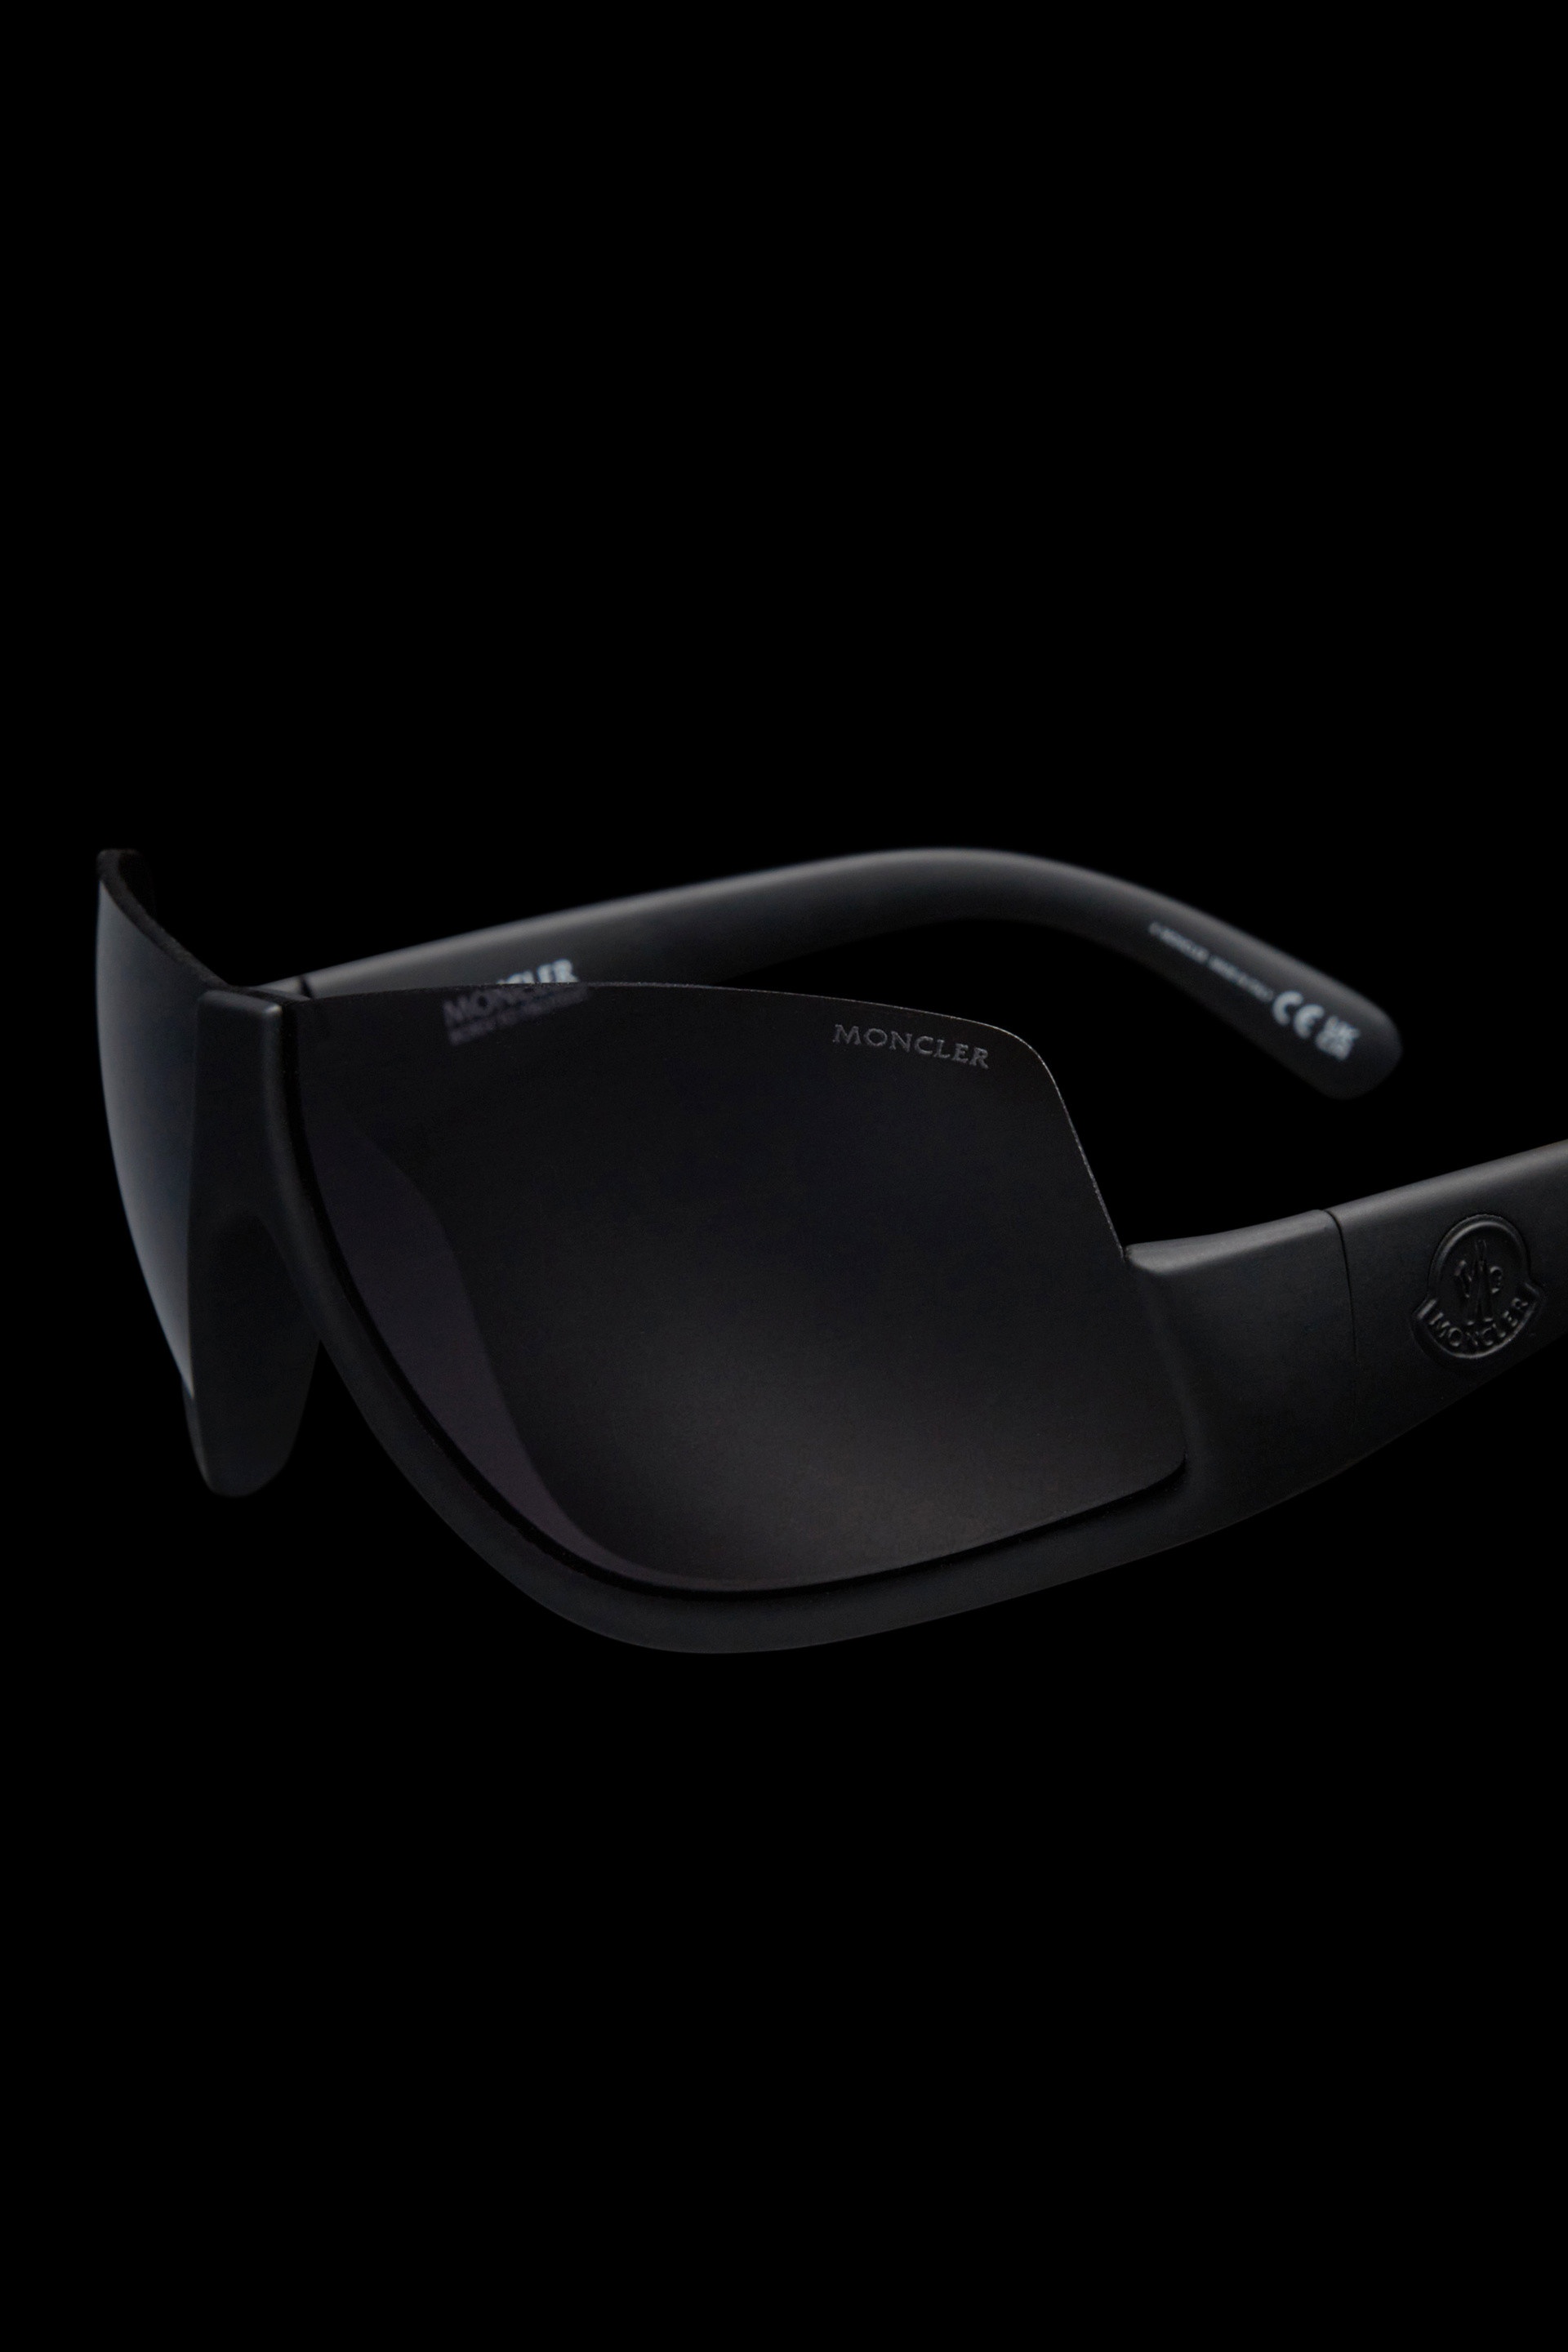 Vyzer Shield Sunglasses - 5